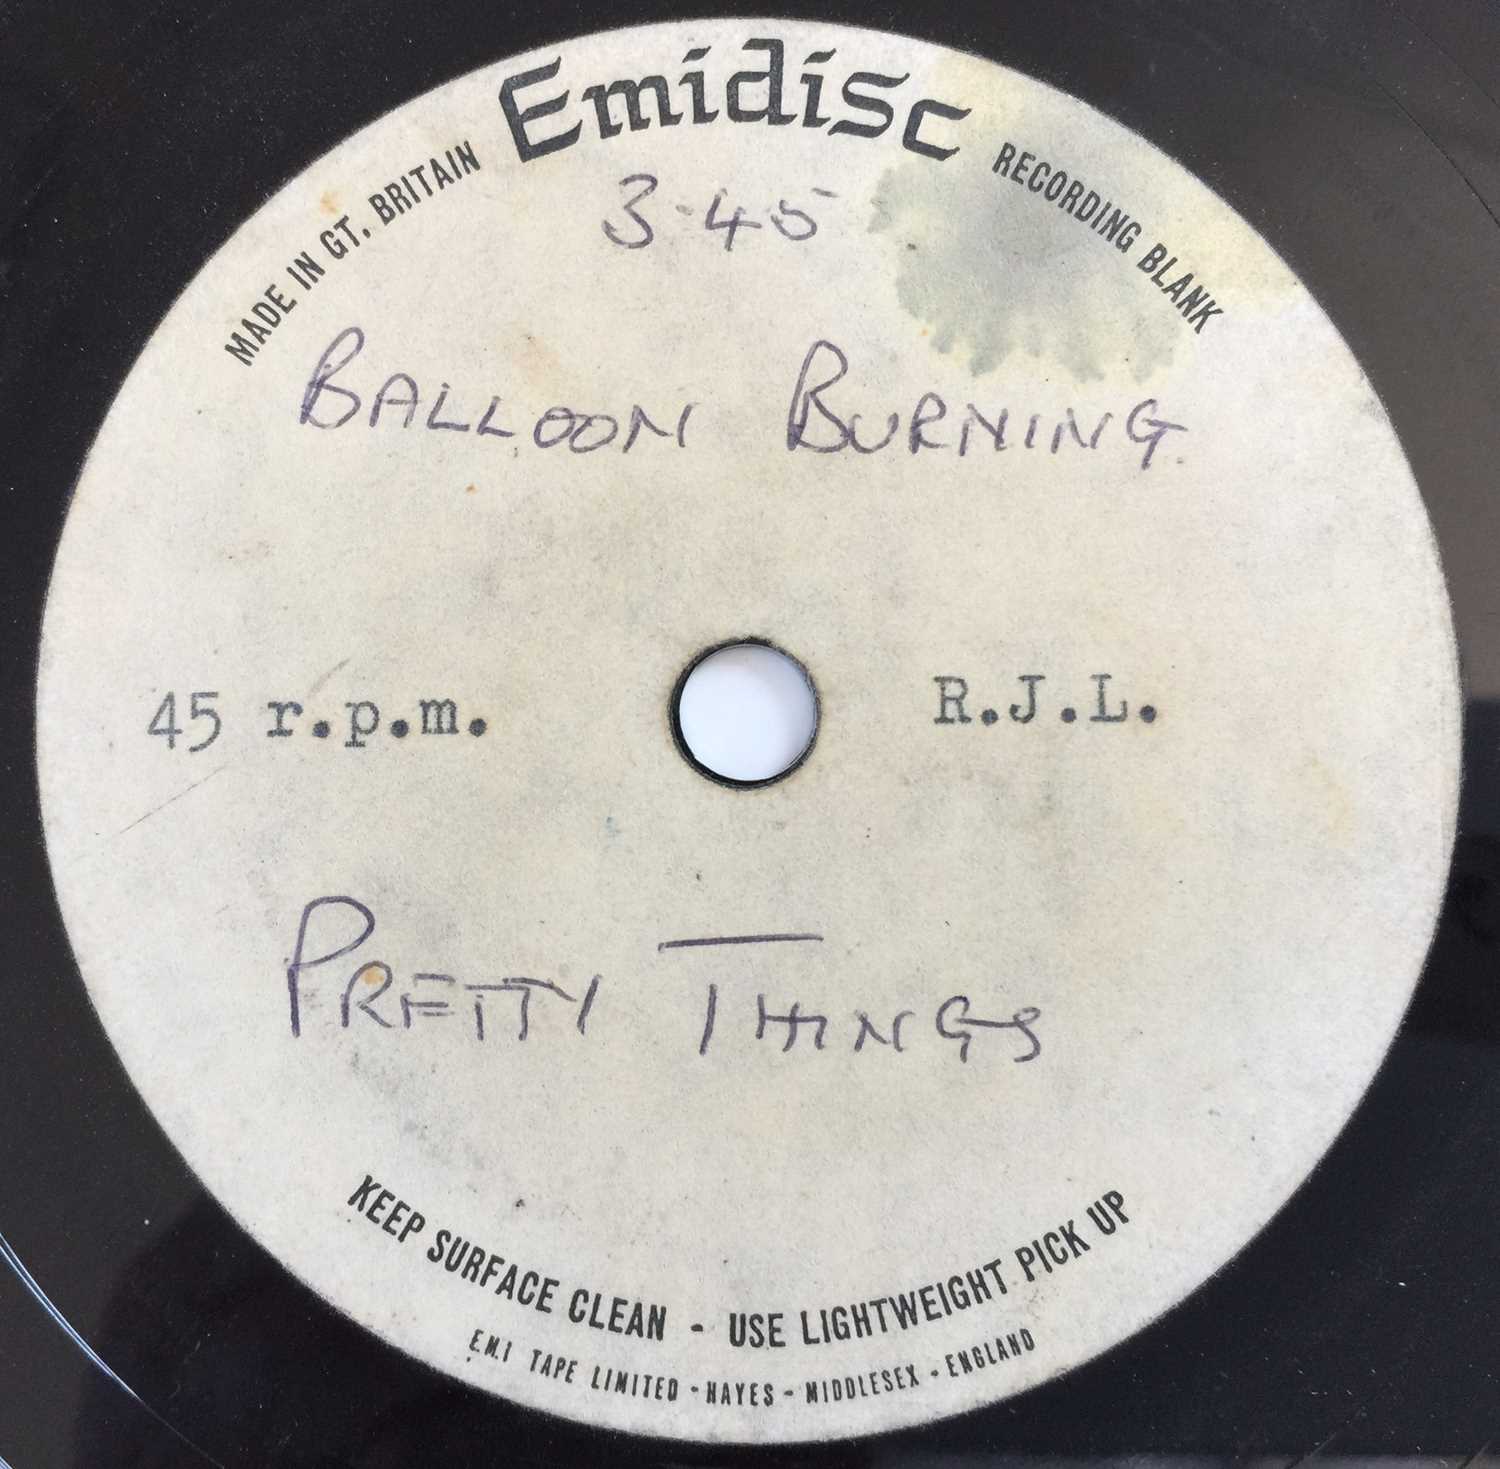 Lot 75 - THE PRETTY THINGS - BALLOON BURNING 7" (ORIGINAL UK EMIDISC RECORDING)